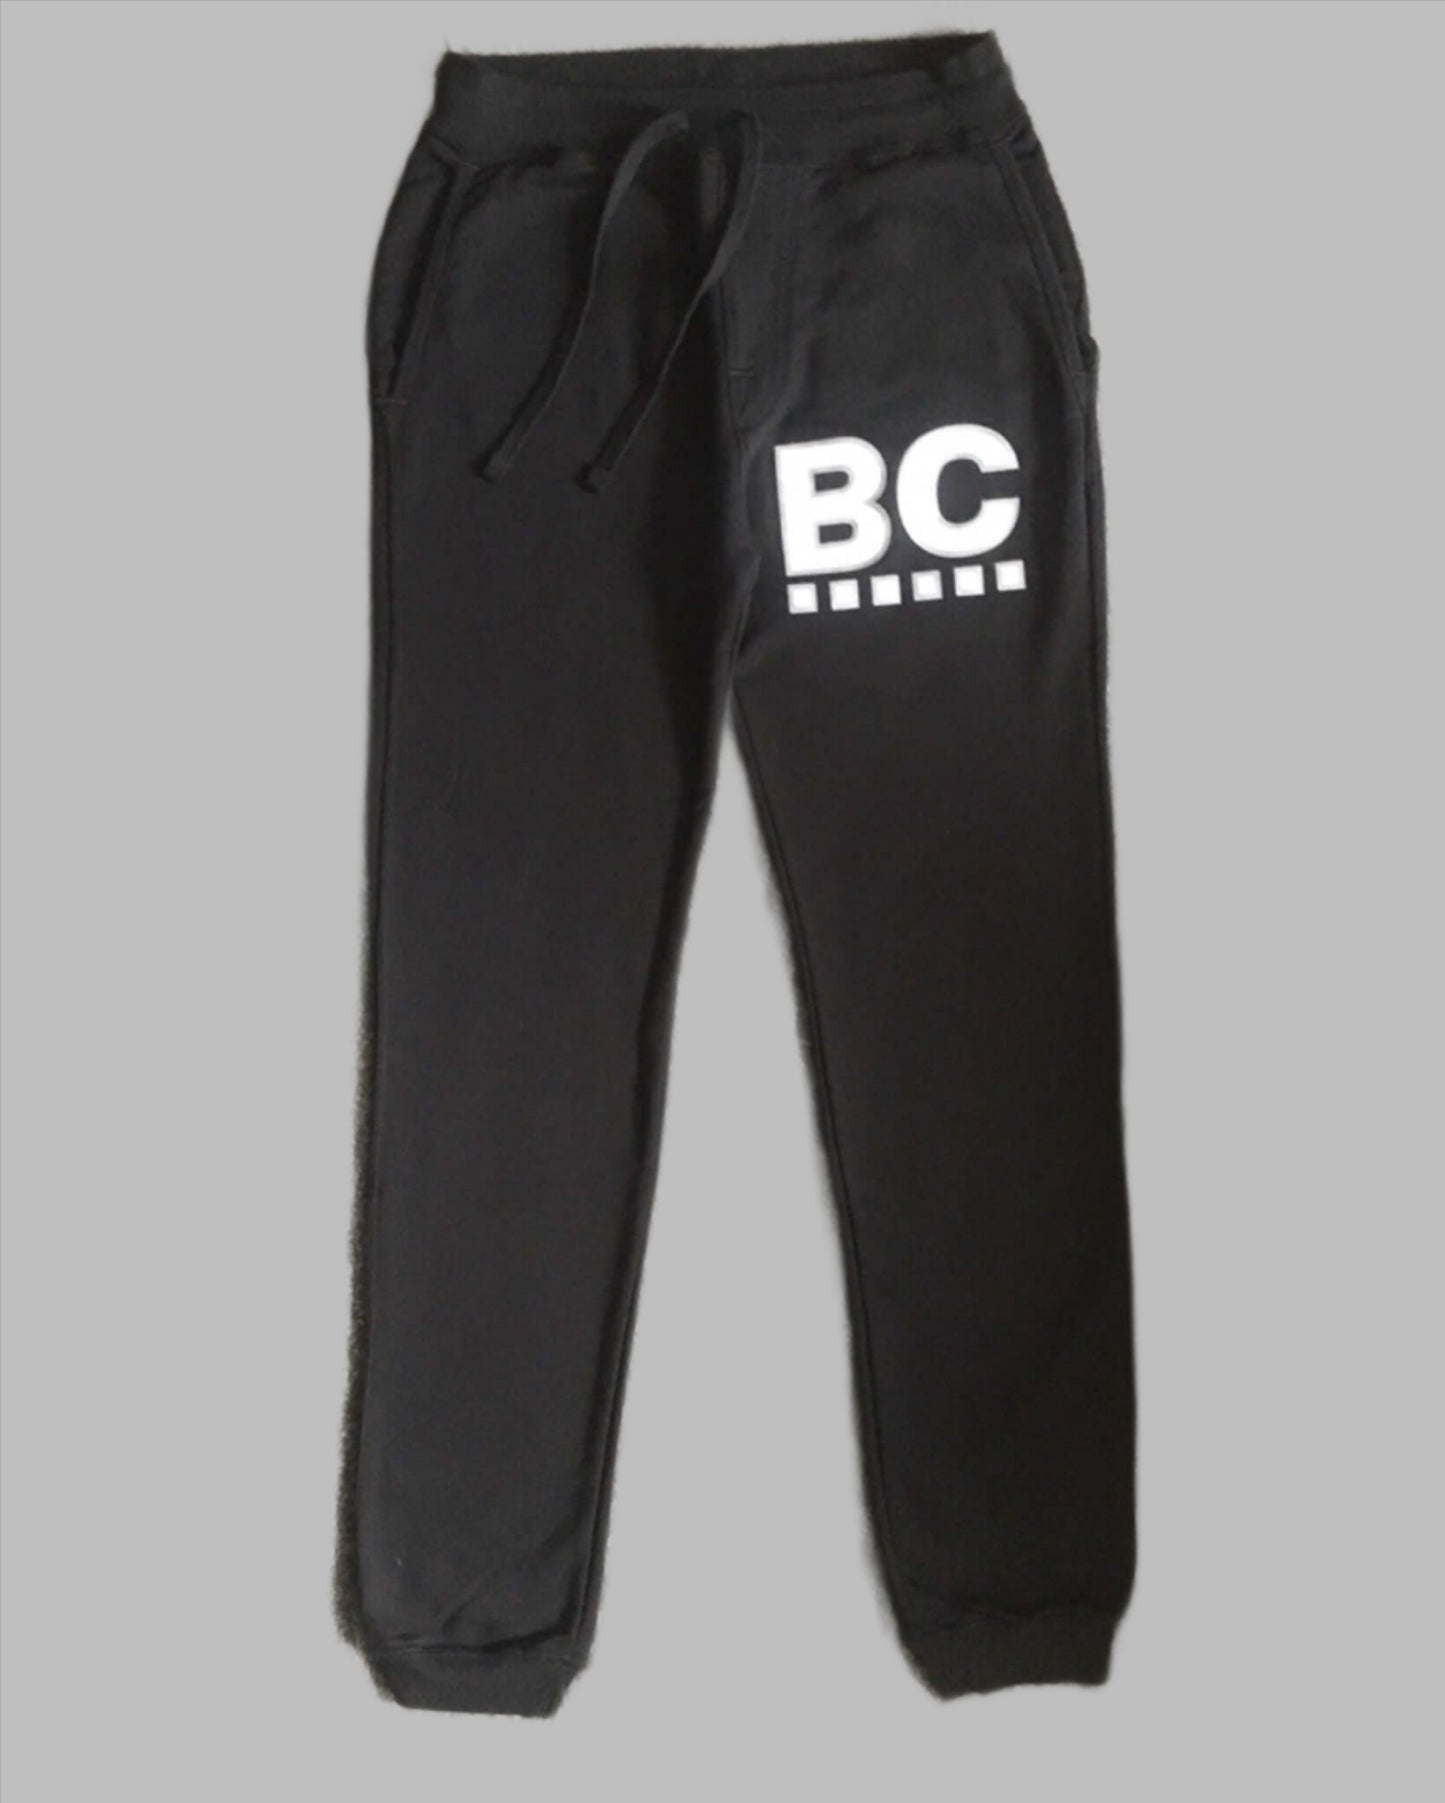 Best Company BC Track Pants Black-40% OFF!